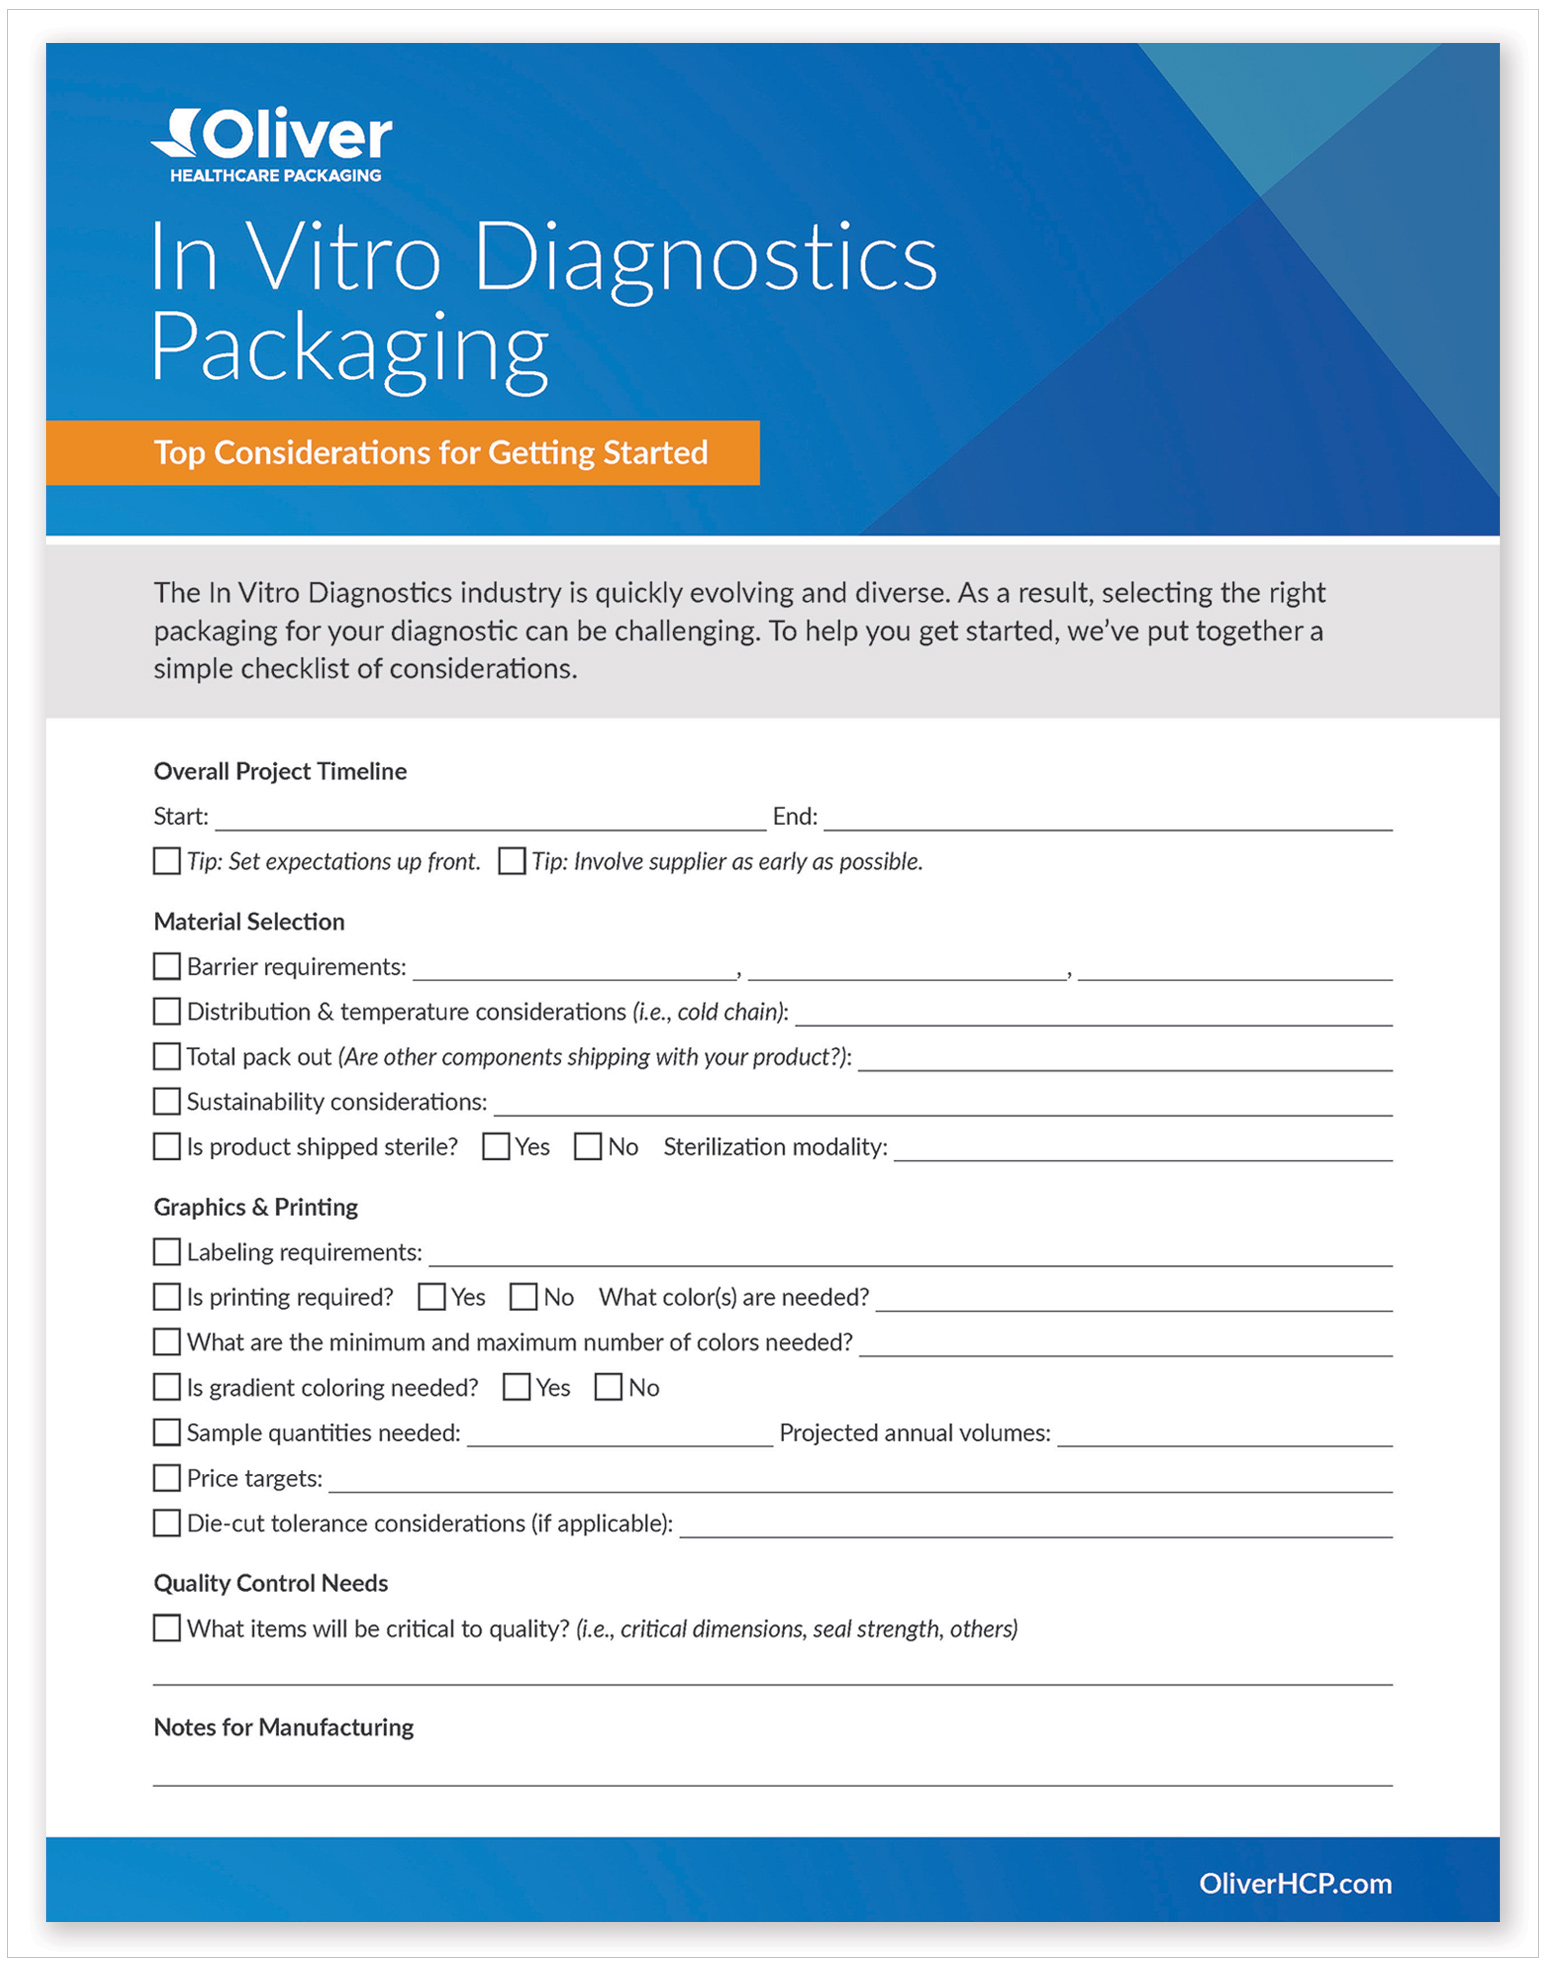 Oliver_InVitro-Diagnostic-Packaging-Checklist_img-1